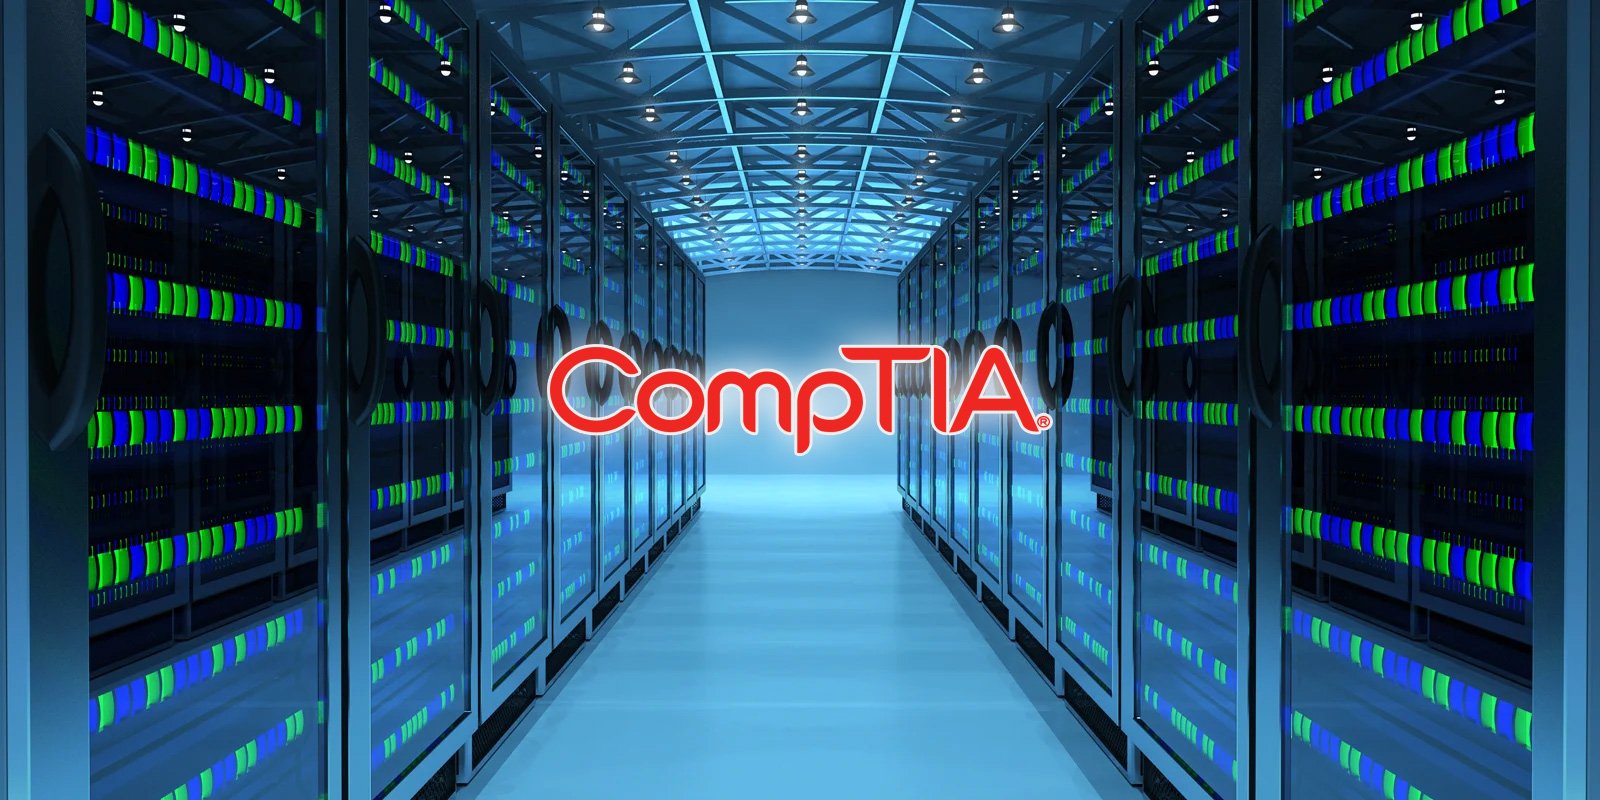 CompTIA logo over image of a data center